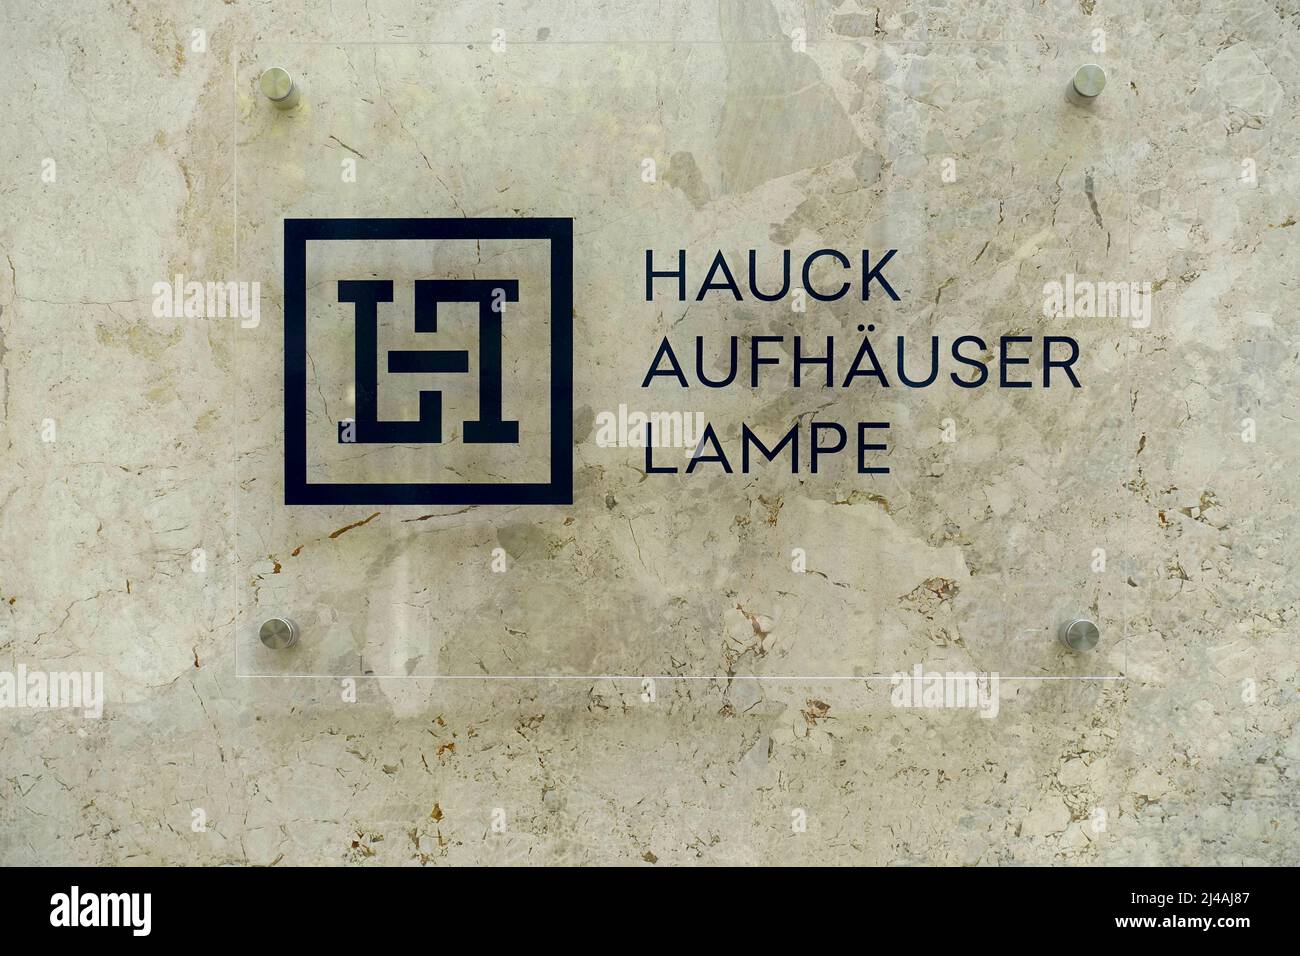 Hauck Aufhäuser Lampe,Hauck & Aufhäuser, Bank, Berlin, Germany Stock Photo  - Alamy